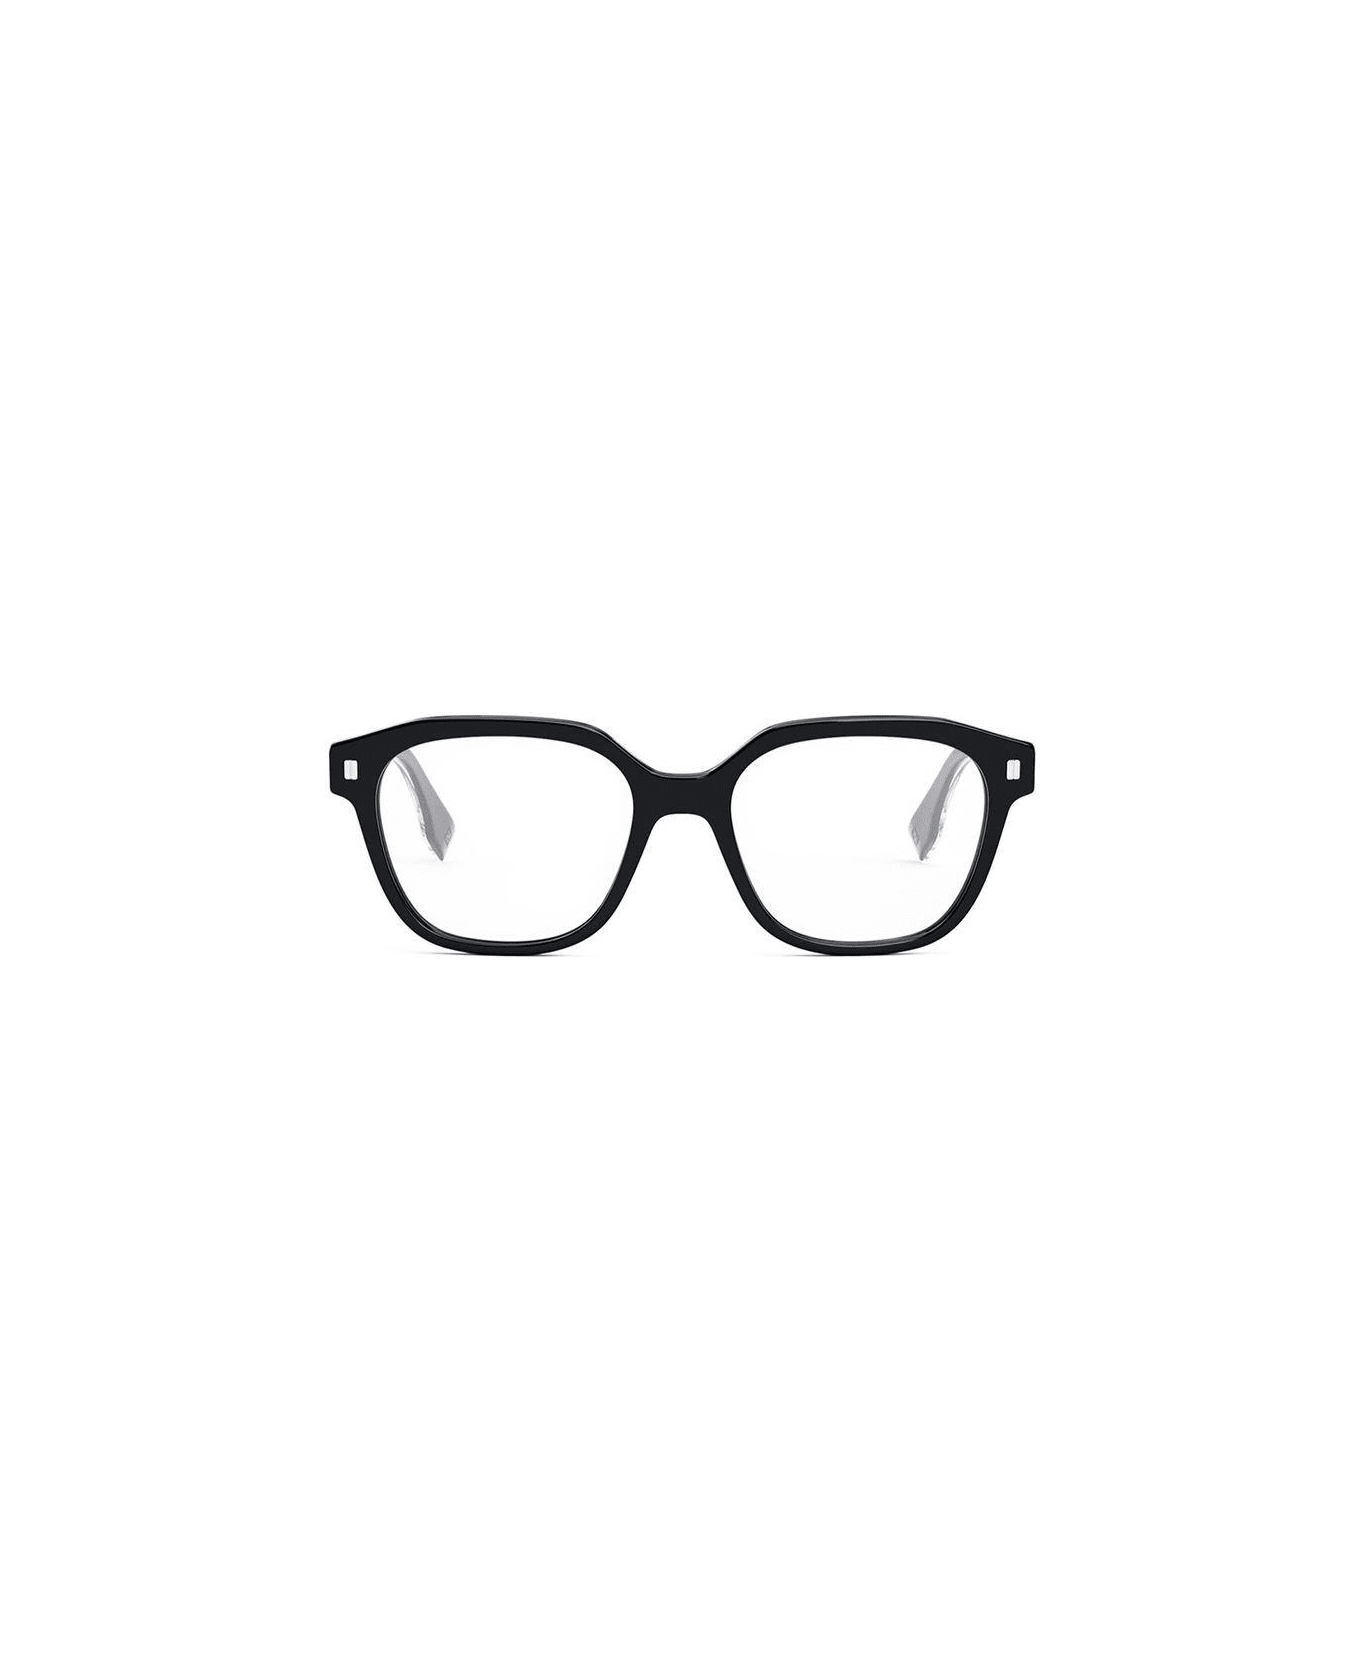 Fendi Eyewear Square-frame Glasses - 001